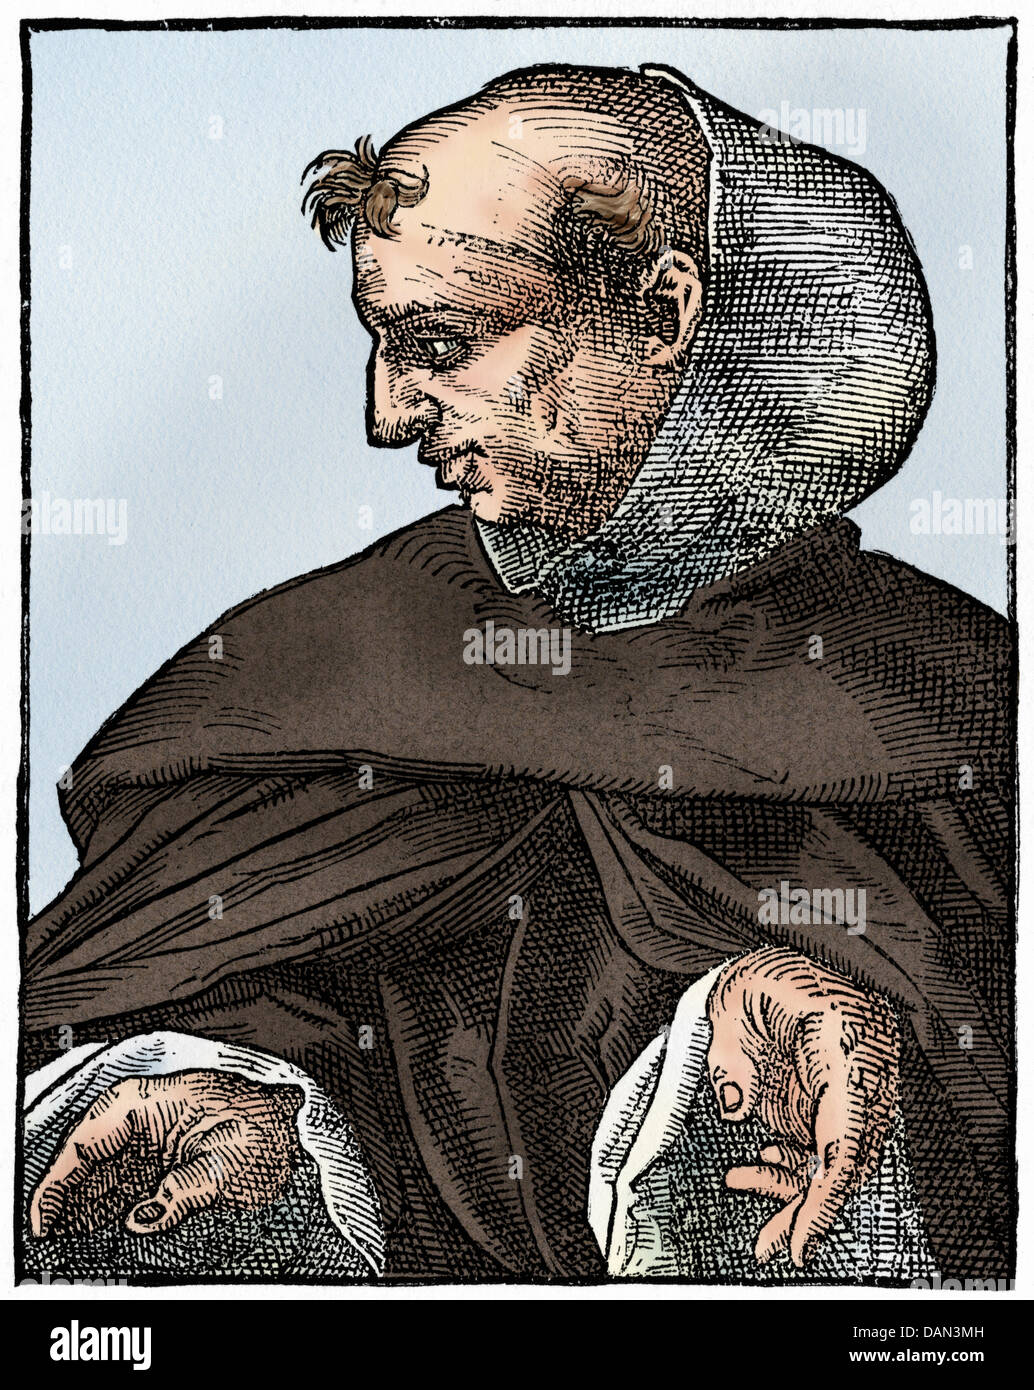 Albertus Magnus, medievale studioso tedesco e teologo. Digitalmente la xilografia colorata Foto Stock